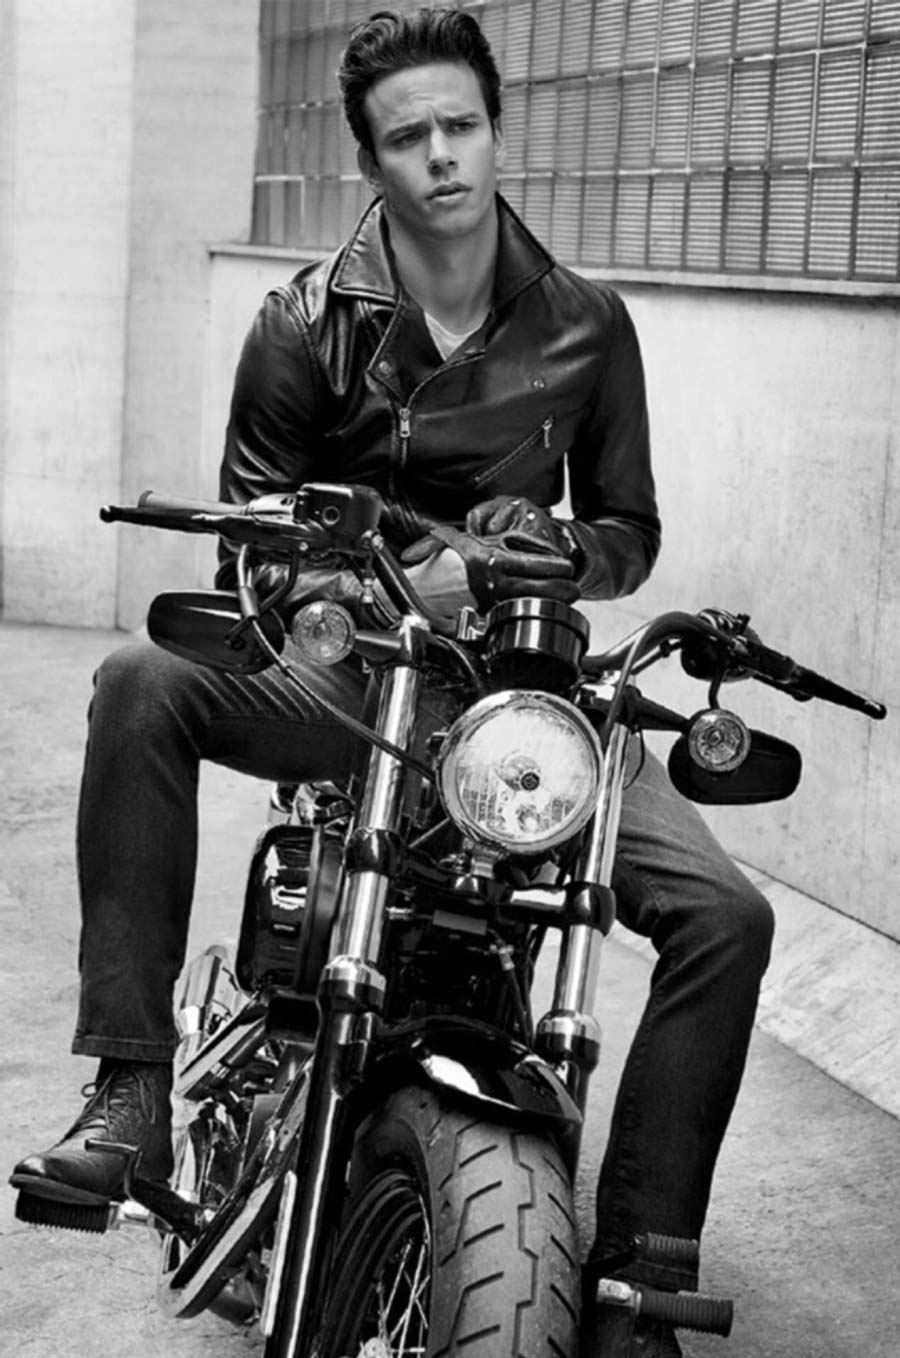 50s-biker-looks-leather-jacket